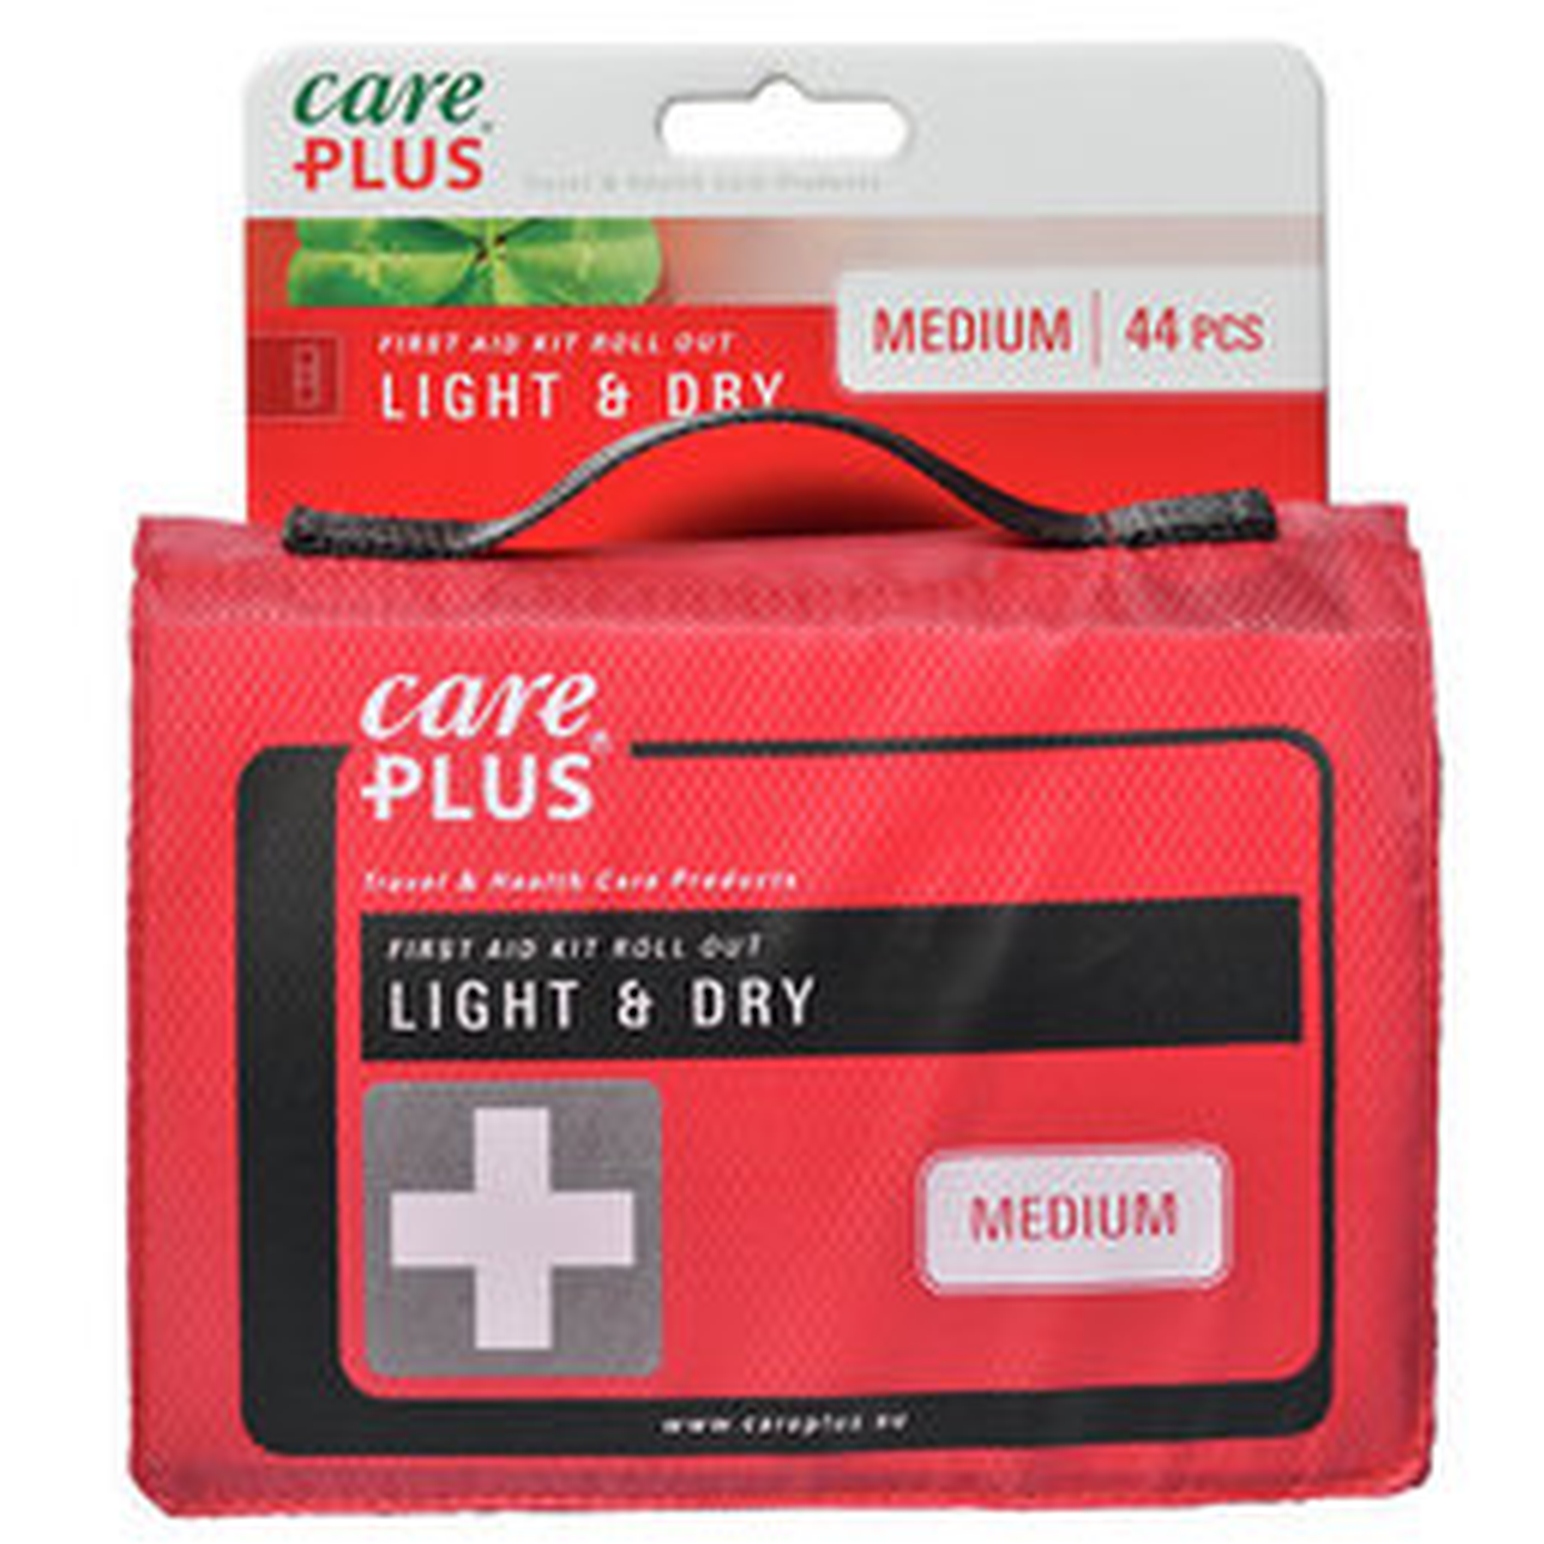 Produktbild von Care Plus Erste Hilfe Set Roll Out - Light &amp; Dry Medium